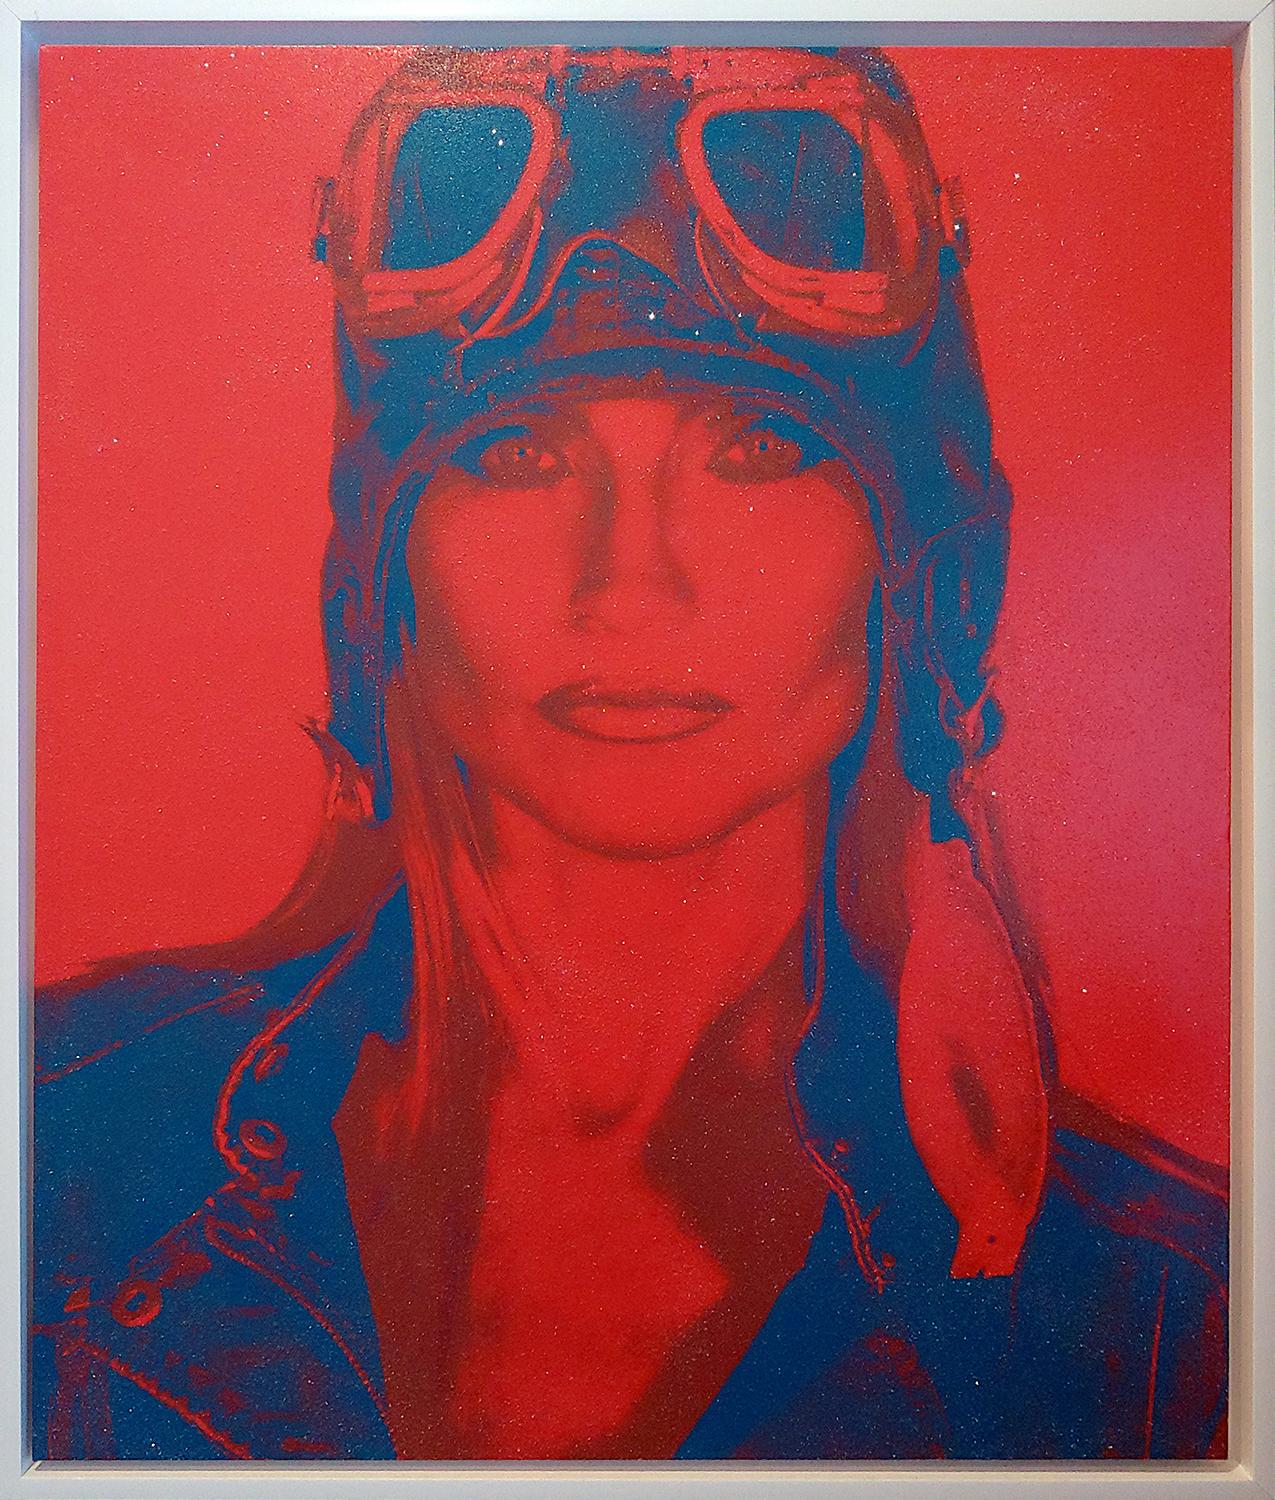 Ceravolo Portrait Painting - AVIATRIX Red and Blue Diamond Dust on Canvas